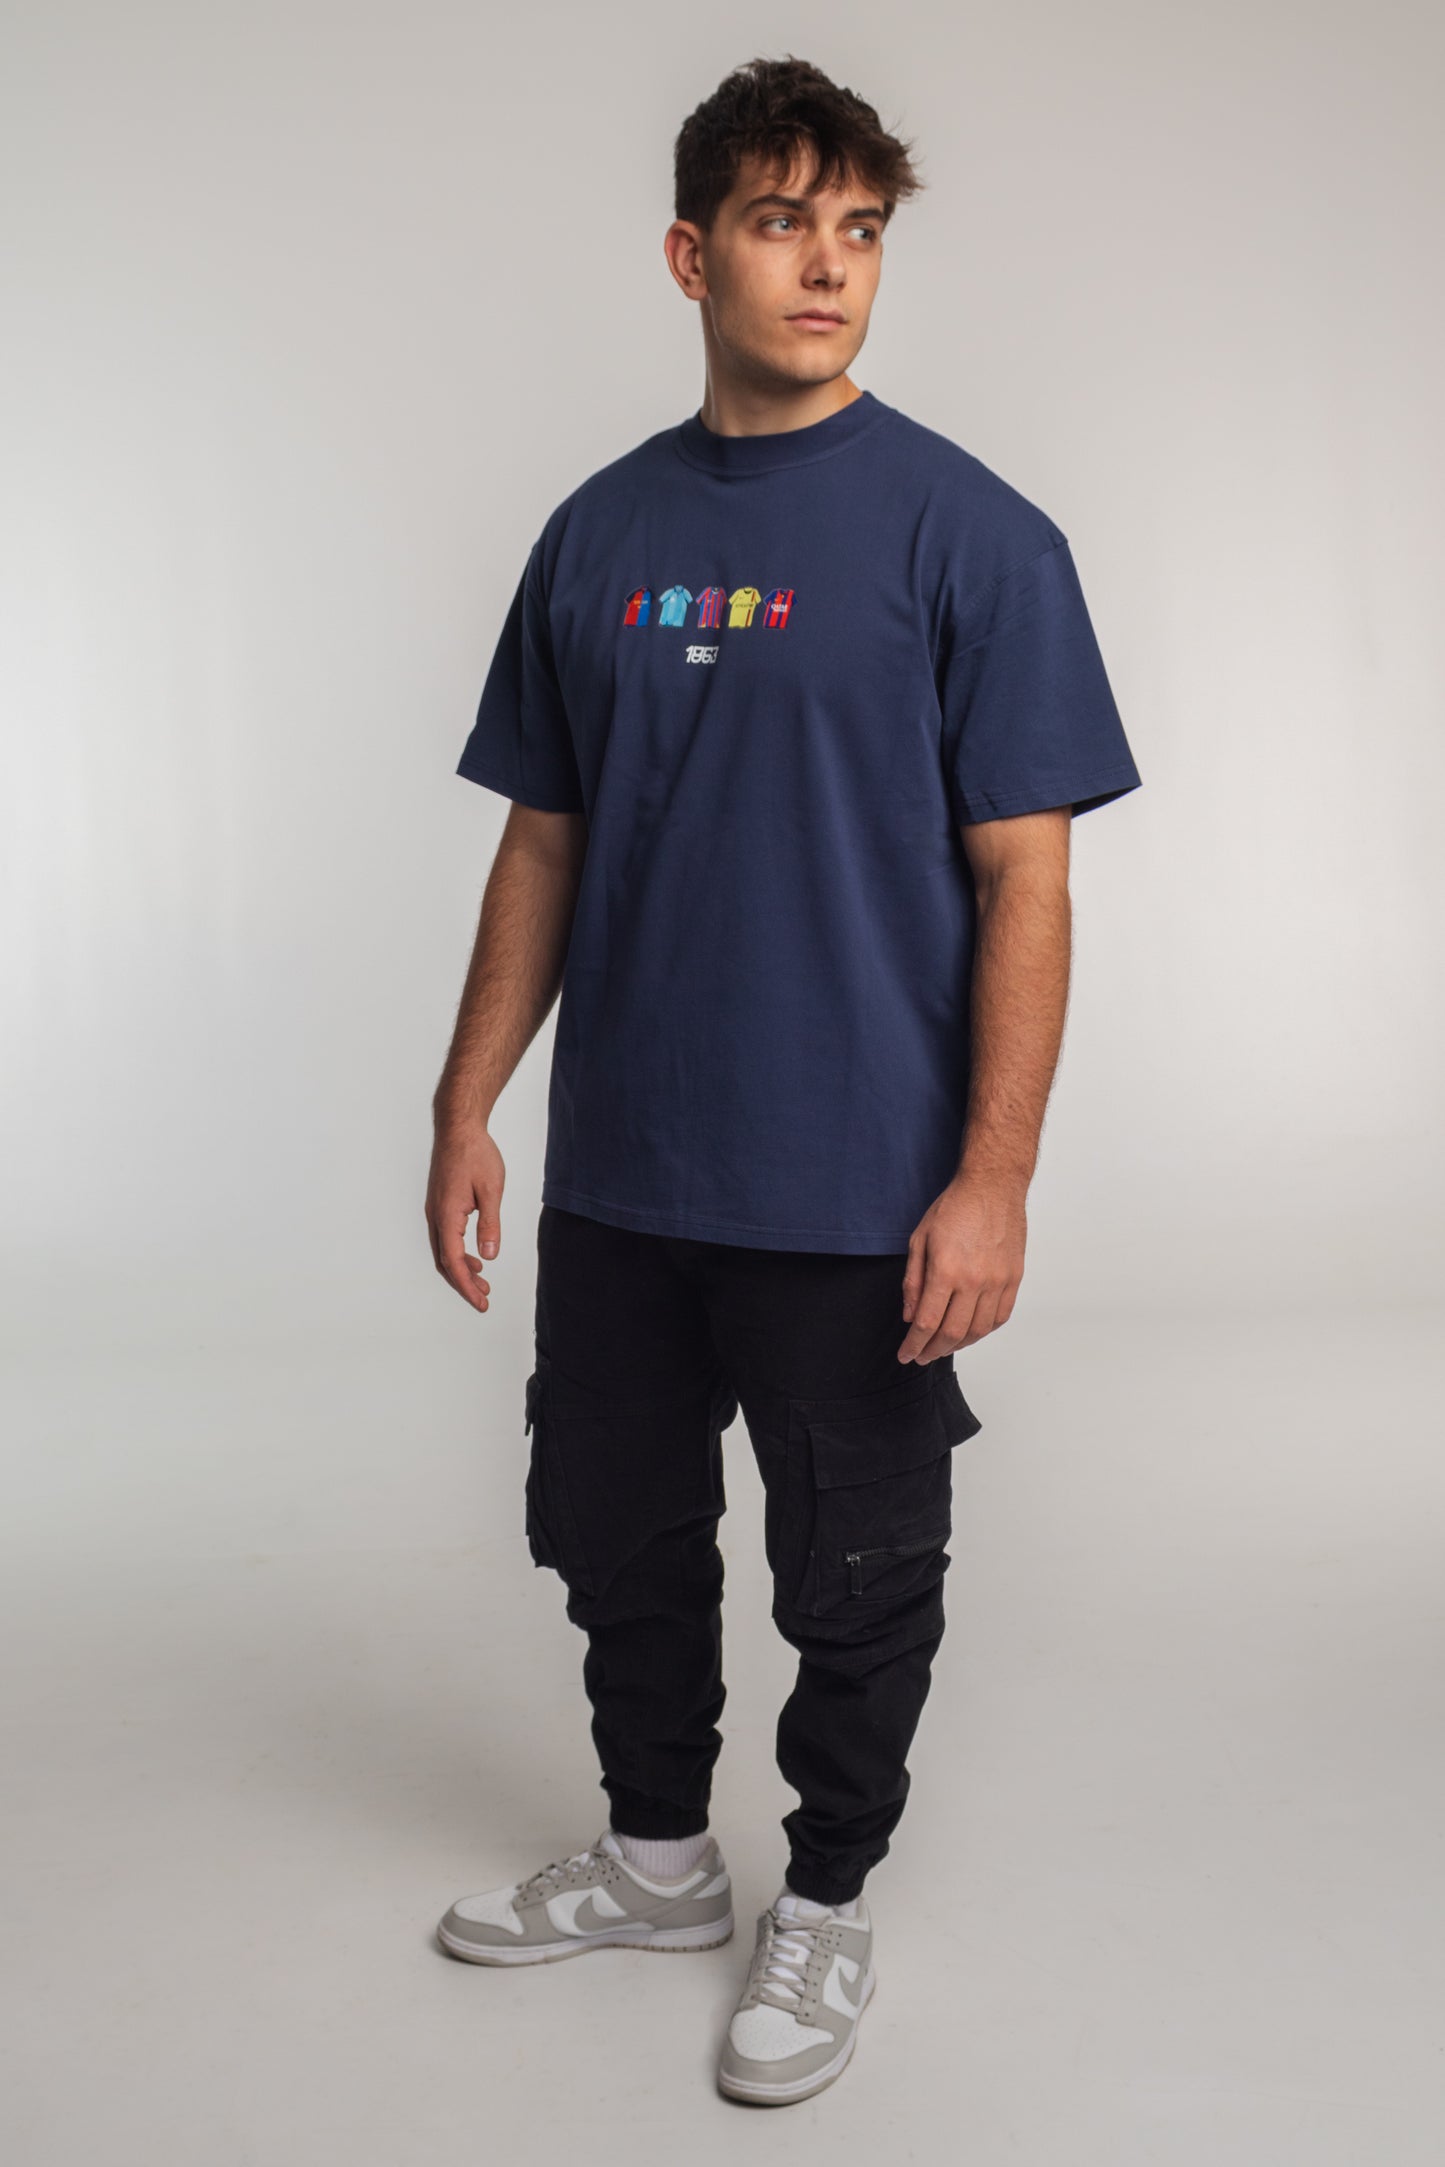 Culers Historical Kits T-shirt - Navy Blue